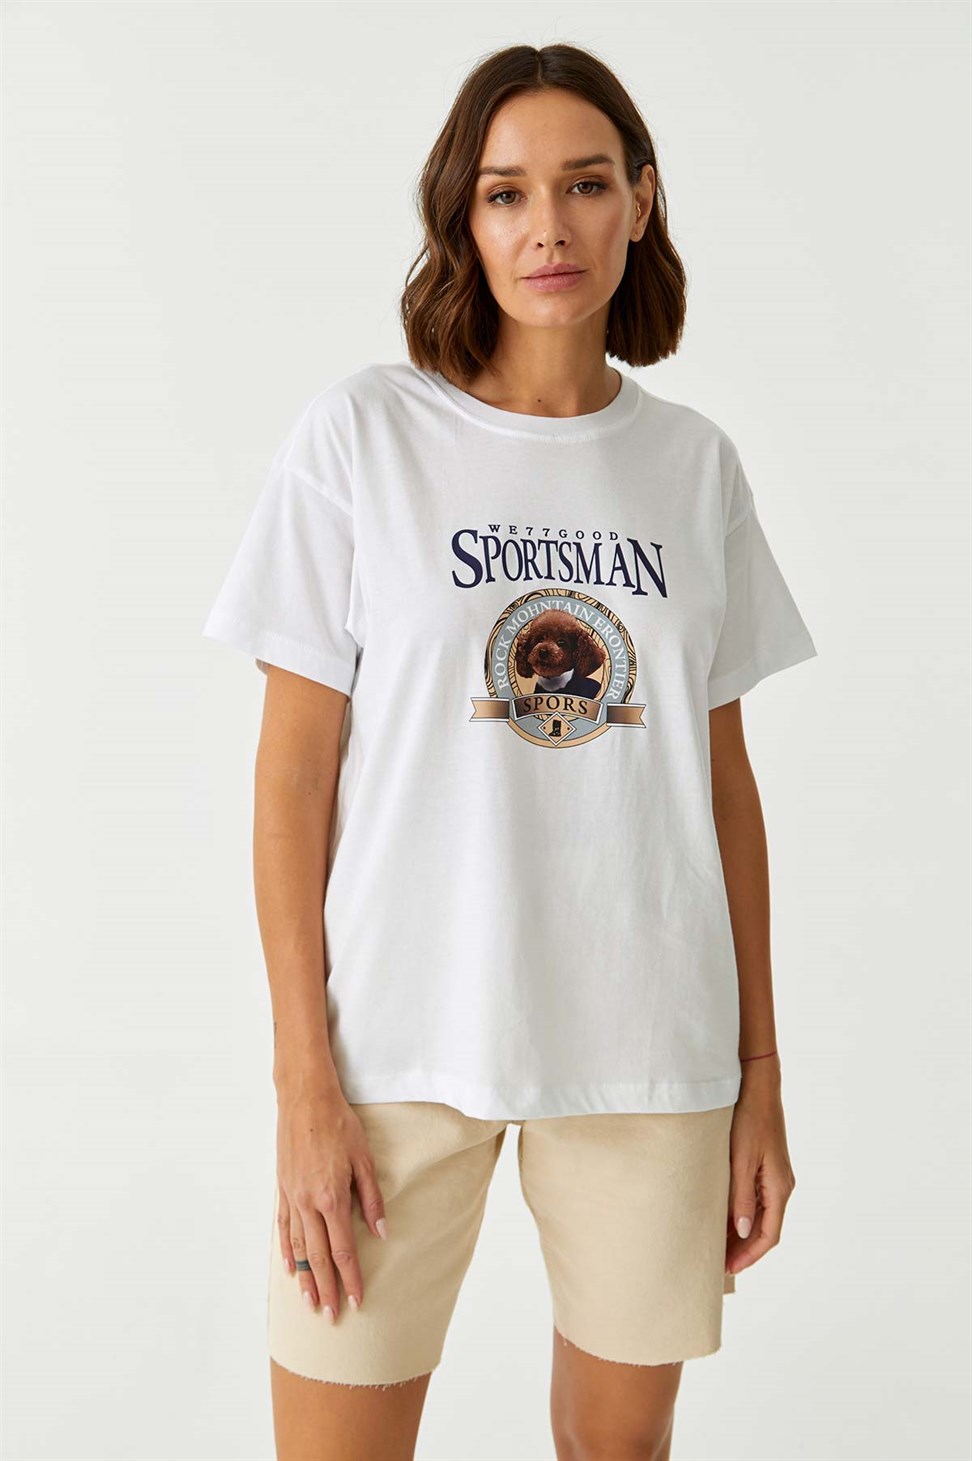 Poodle Printed Bicycle Yaka White Woman T-Shirt